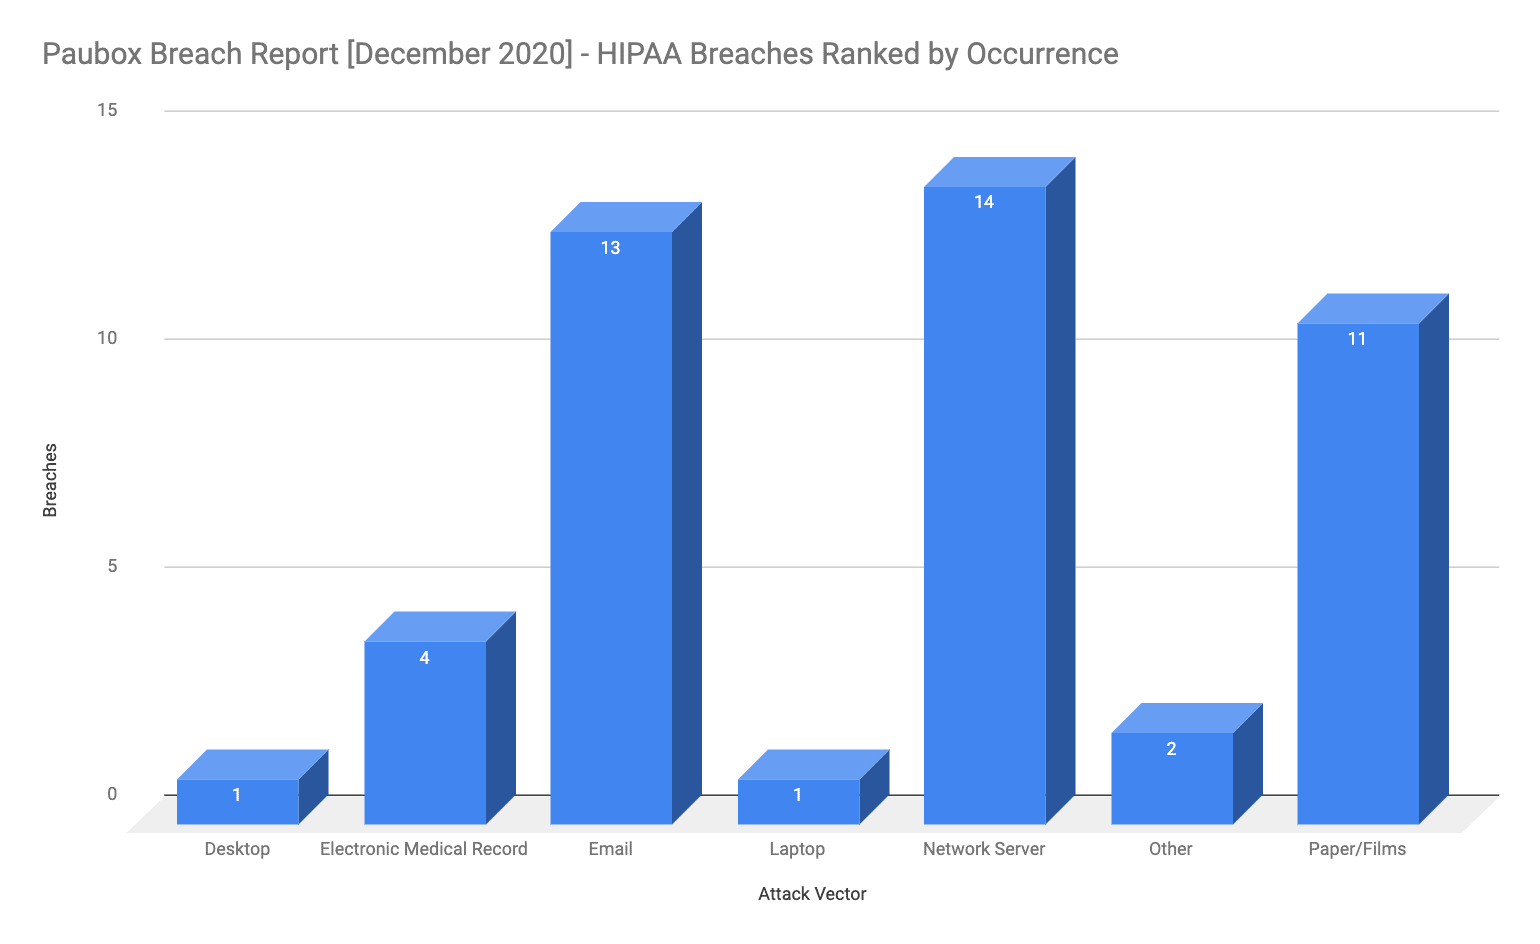 HIPAA Breach Report for December 2020